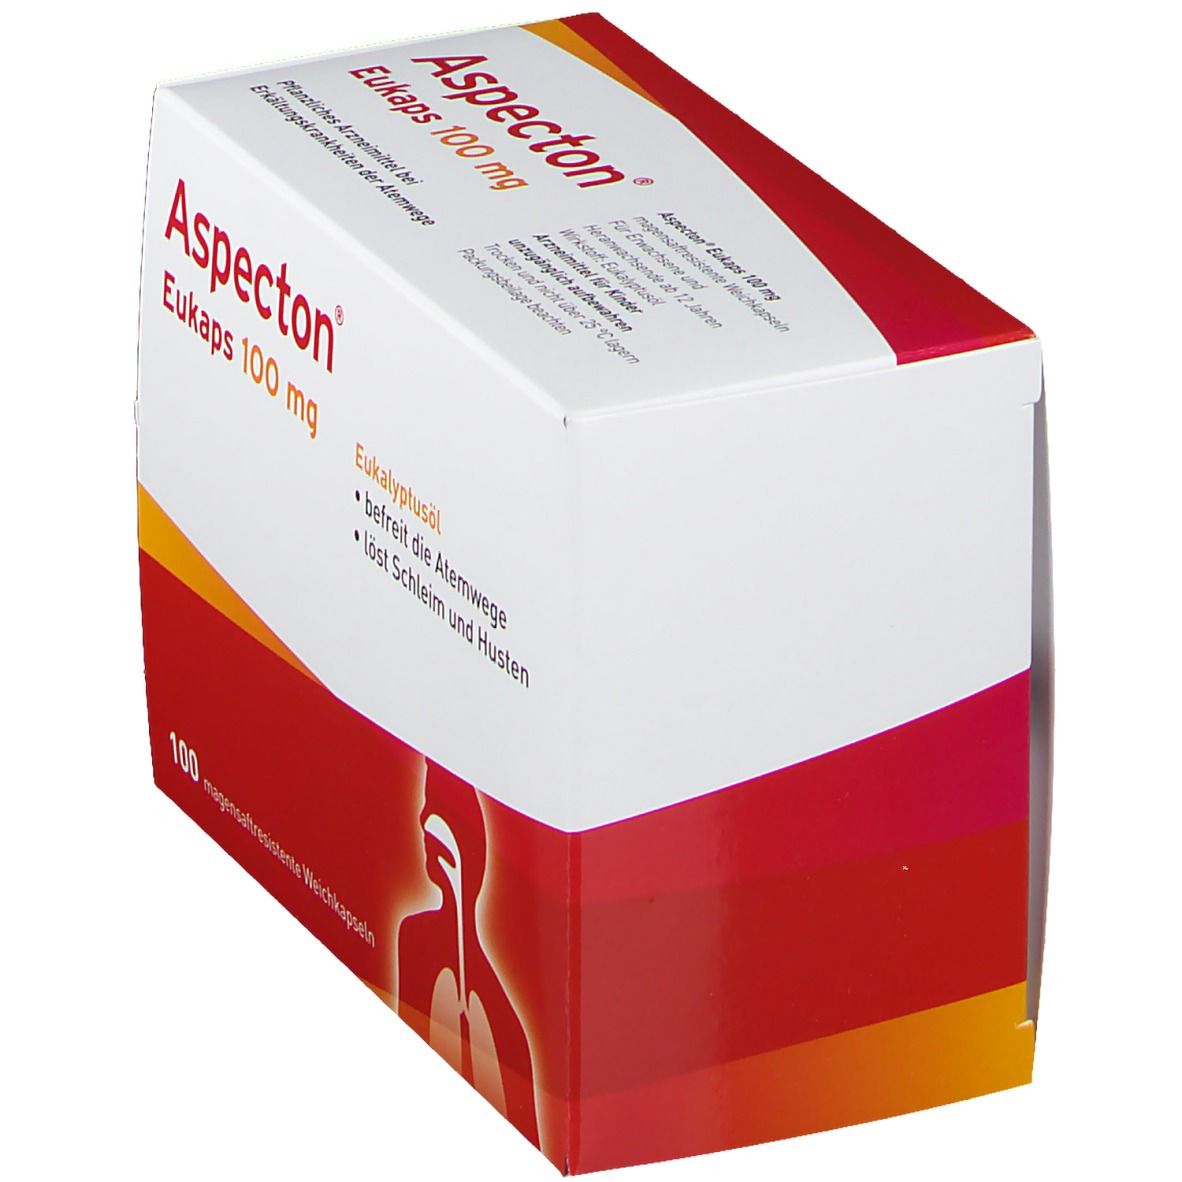 Aspecton® Eukaps 100 mg